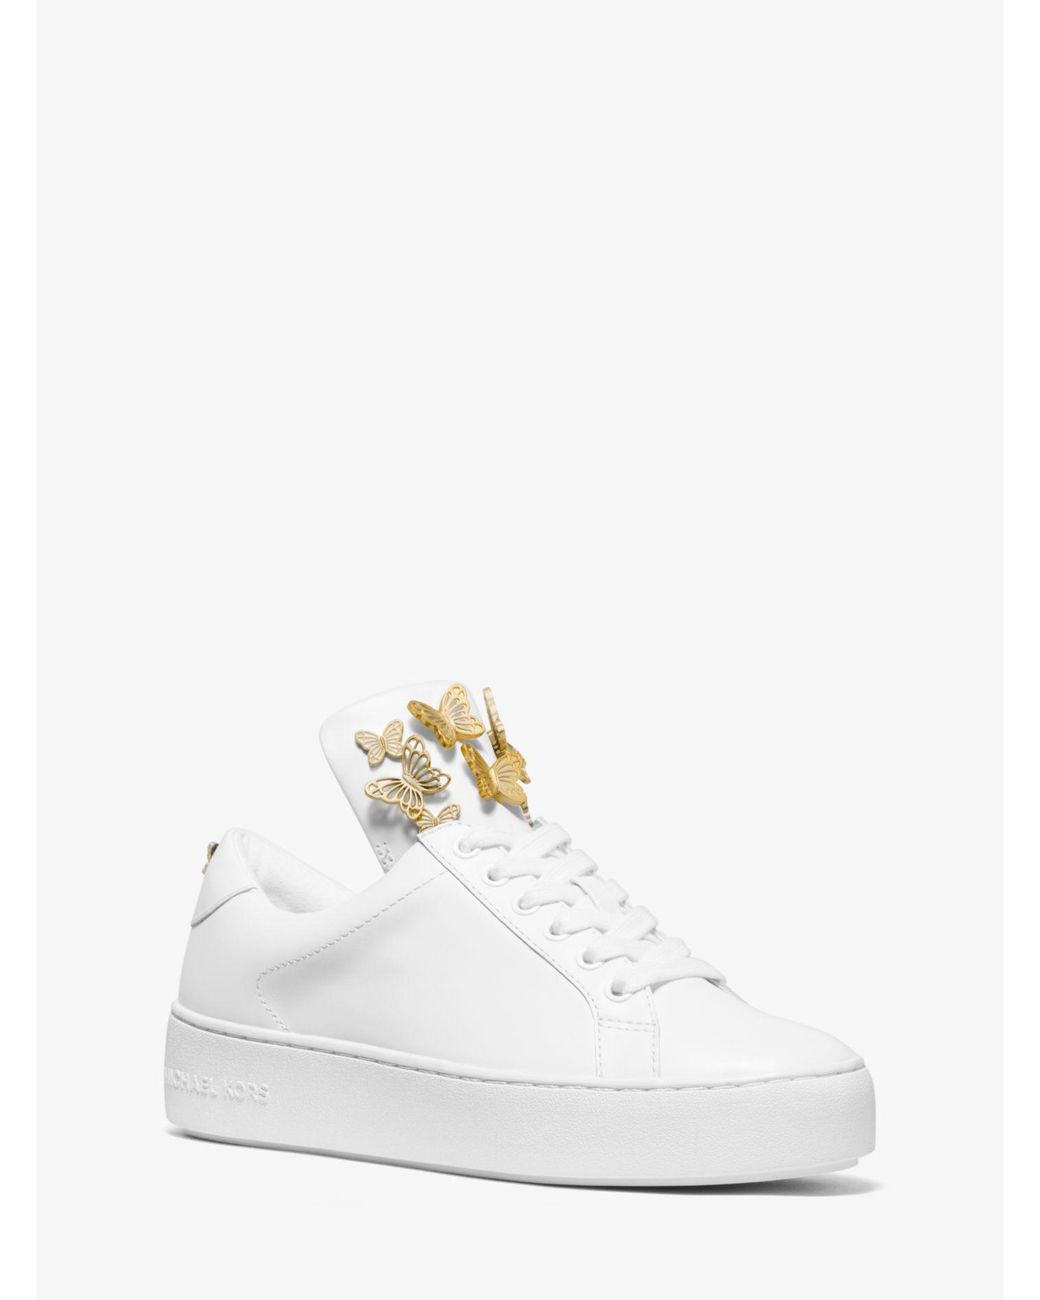 Michael Kors Mindy Butterfly Appliqué Leather Sneaker in White | Lyst